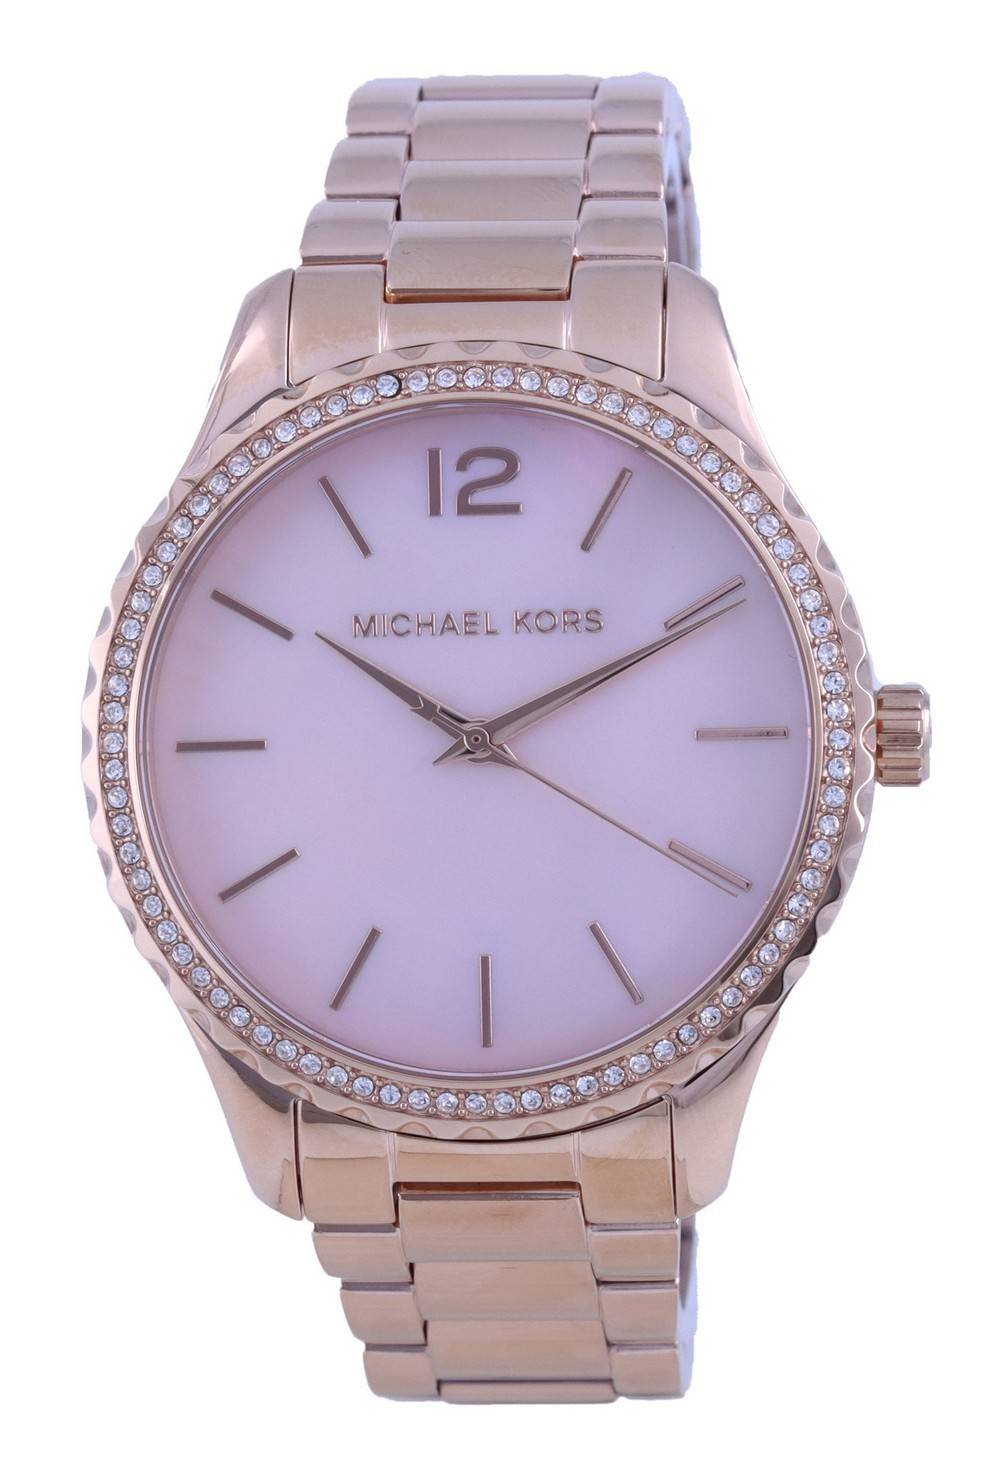 Michael Kors Layton Crystal Accents Quartz MK6848 Women's Watch